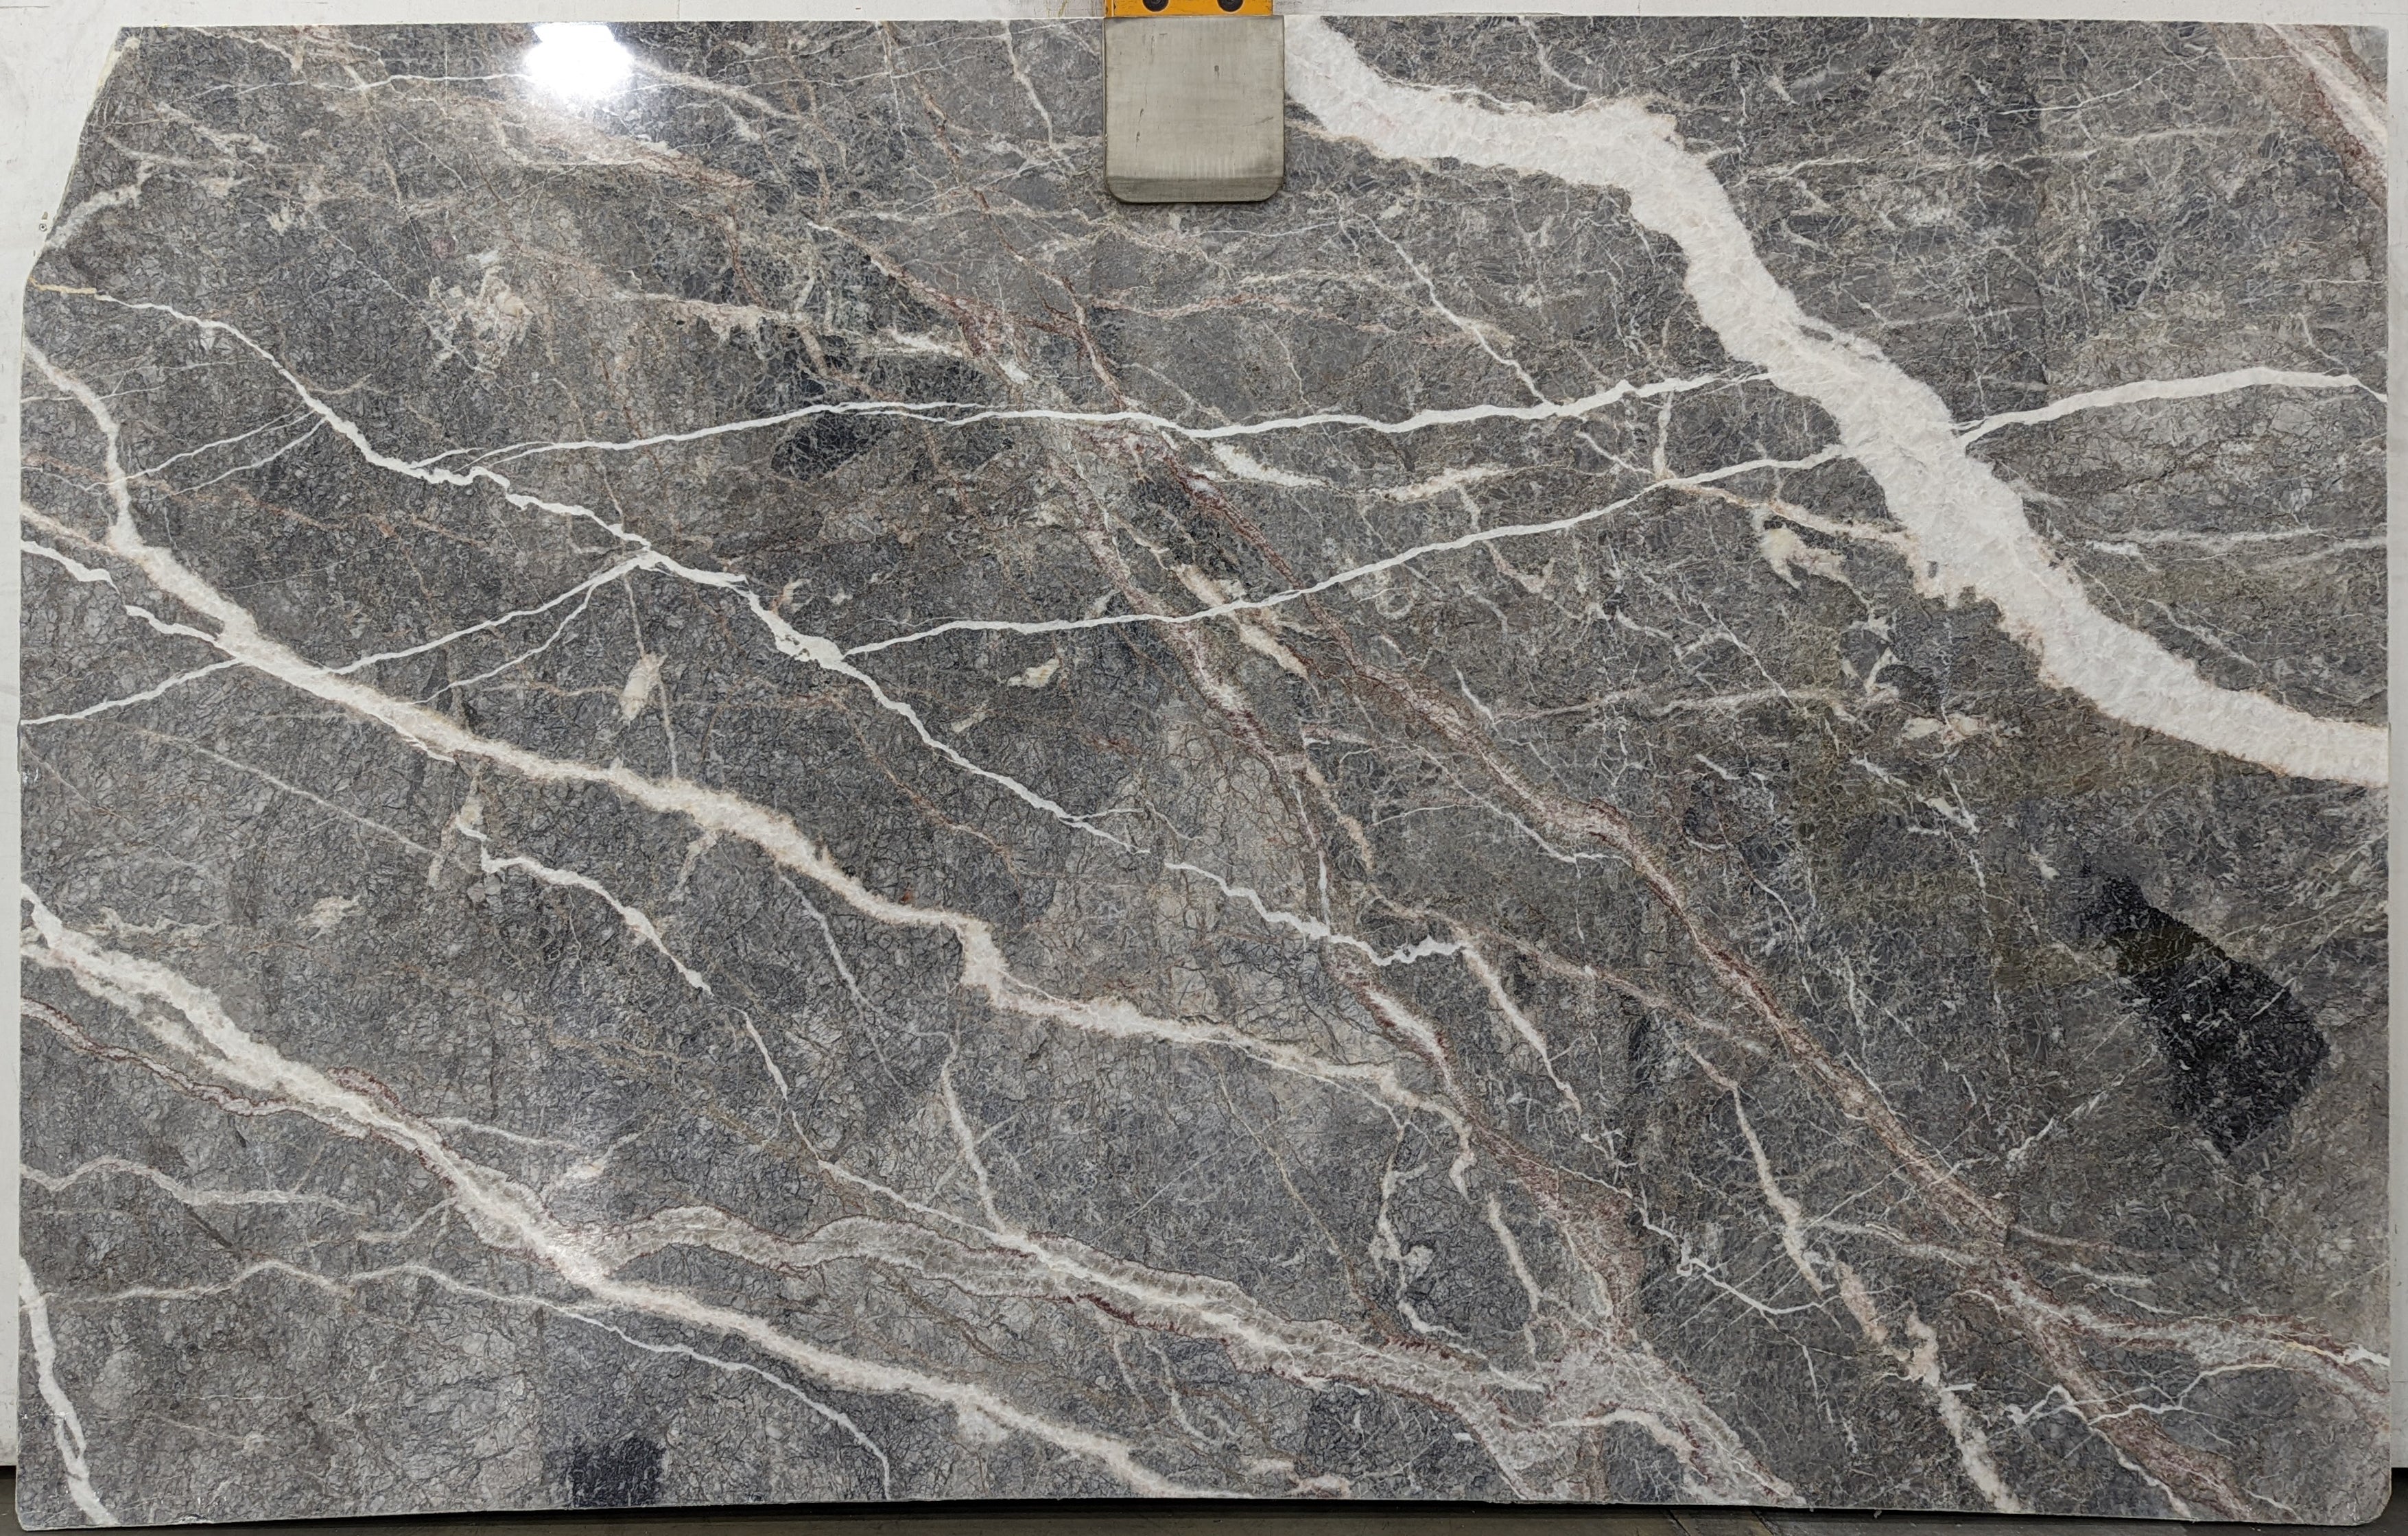  Fior Di Pesco Marble Slab 3/4  Polished Stone - B051659#28 -  69x106 